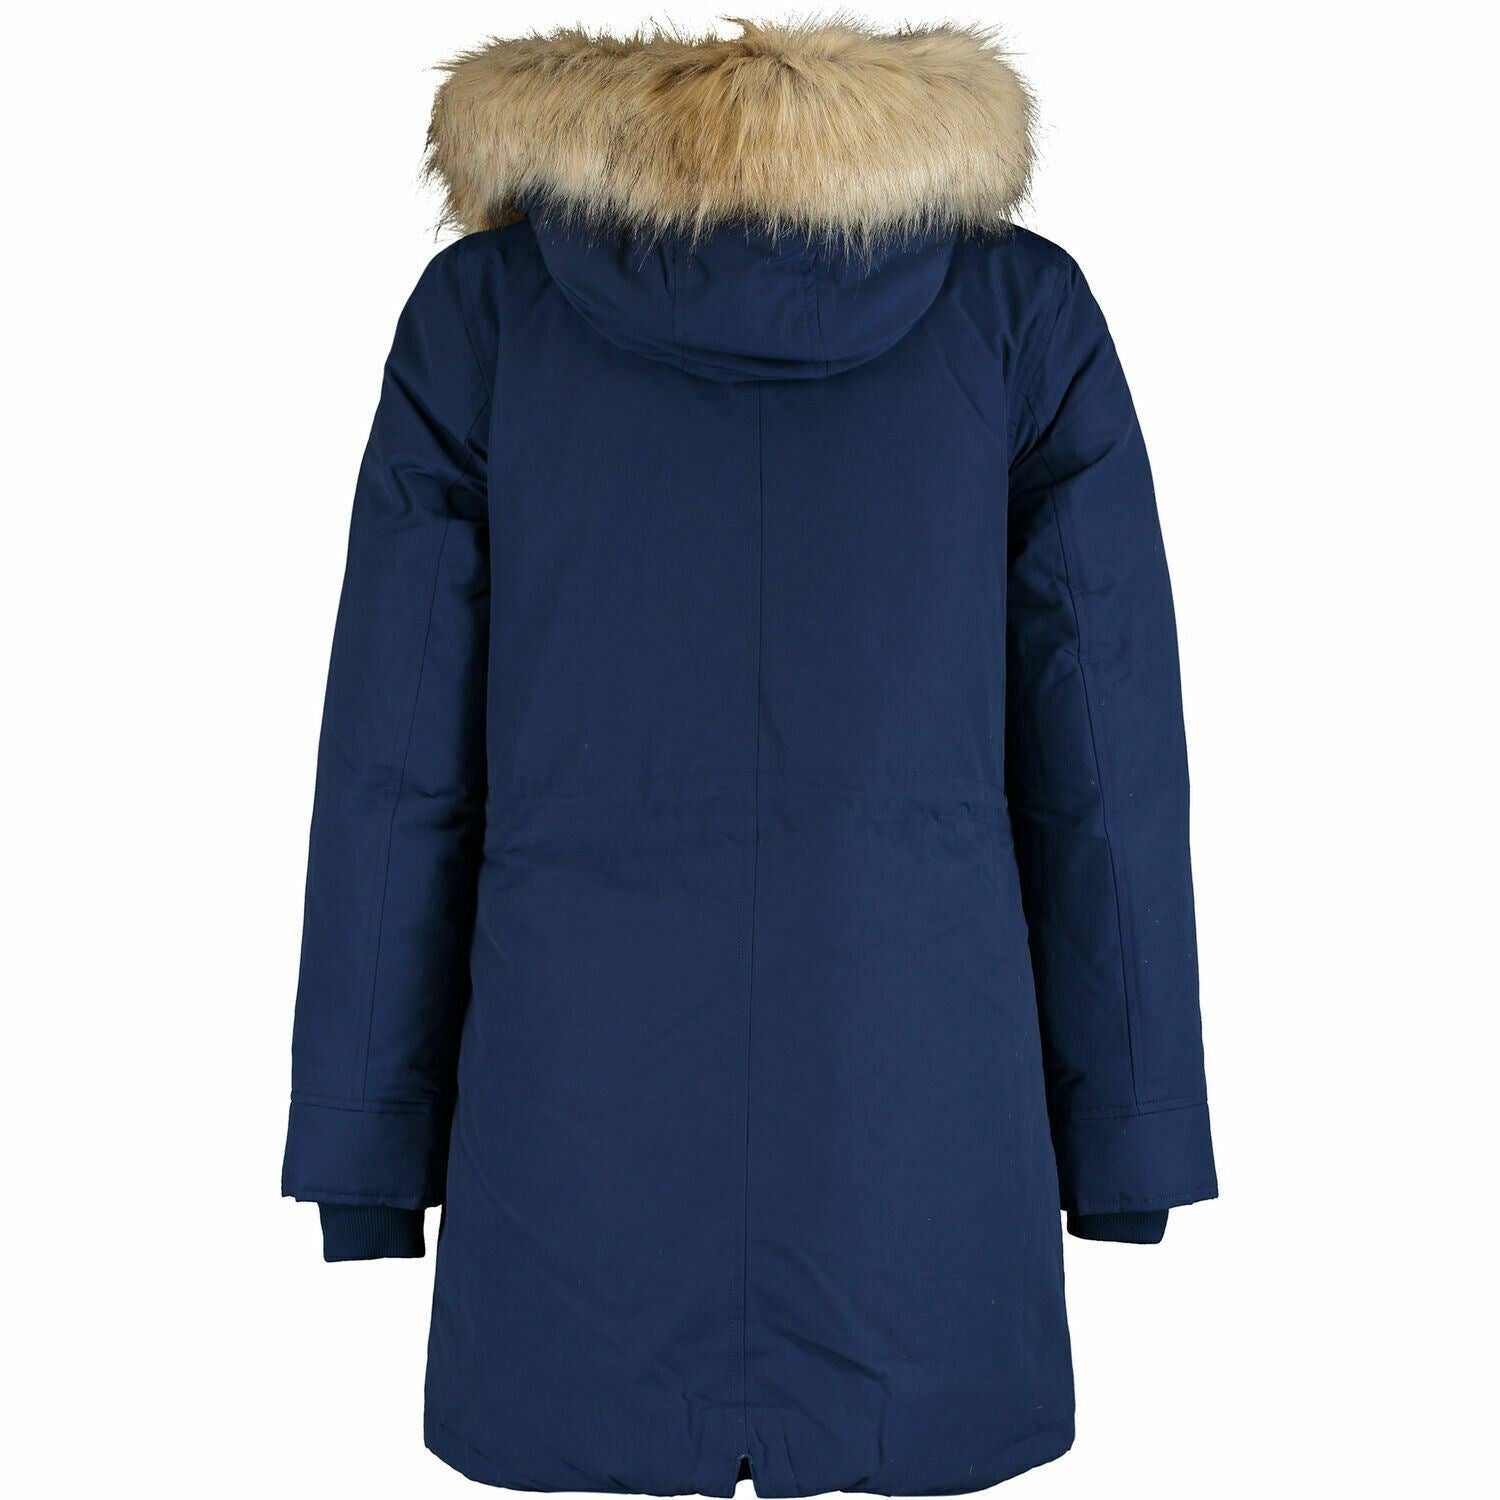 LEVI'S Women's EDITH Warm Hooded Parka Coat, Medieval Blue, size XS